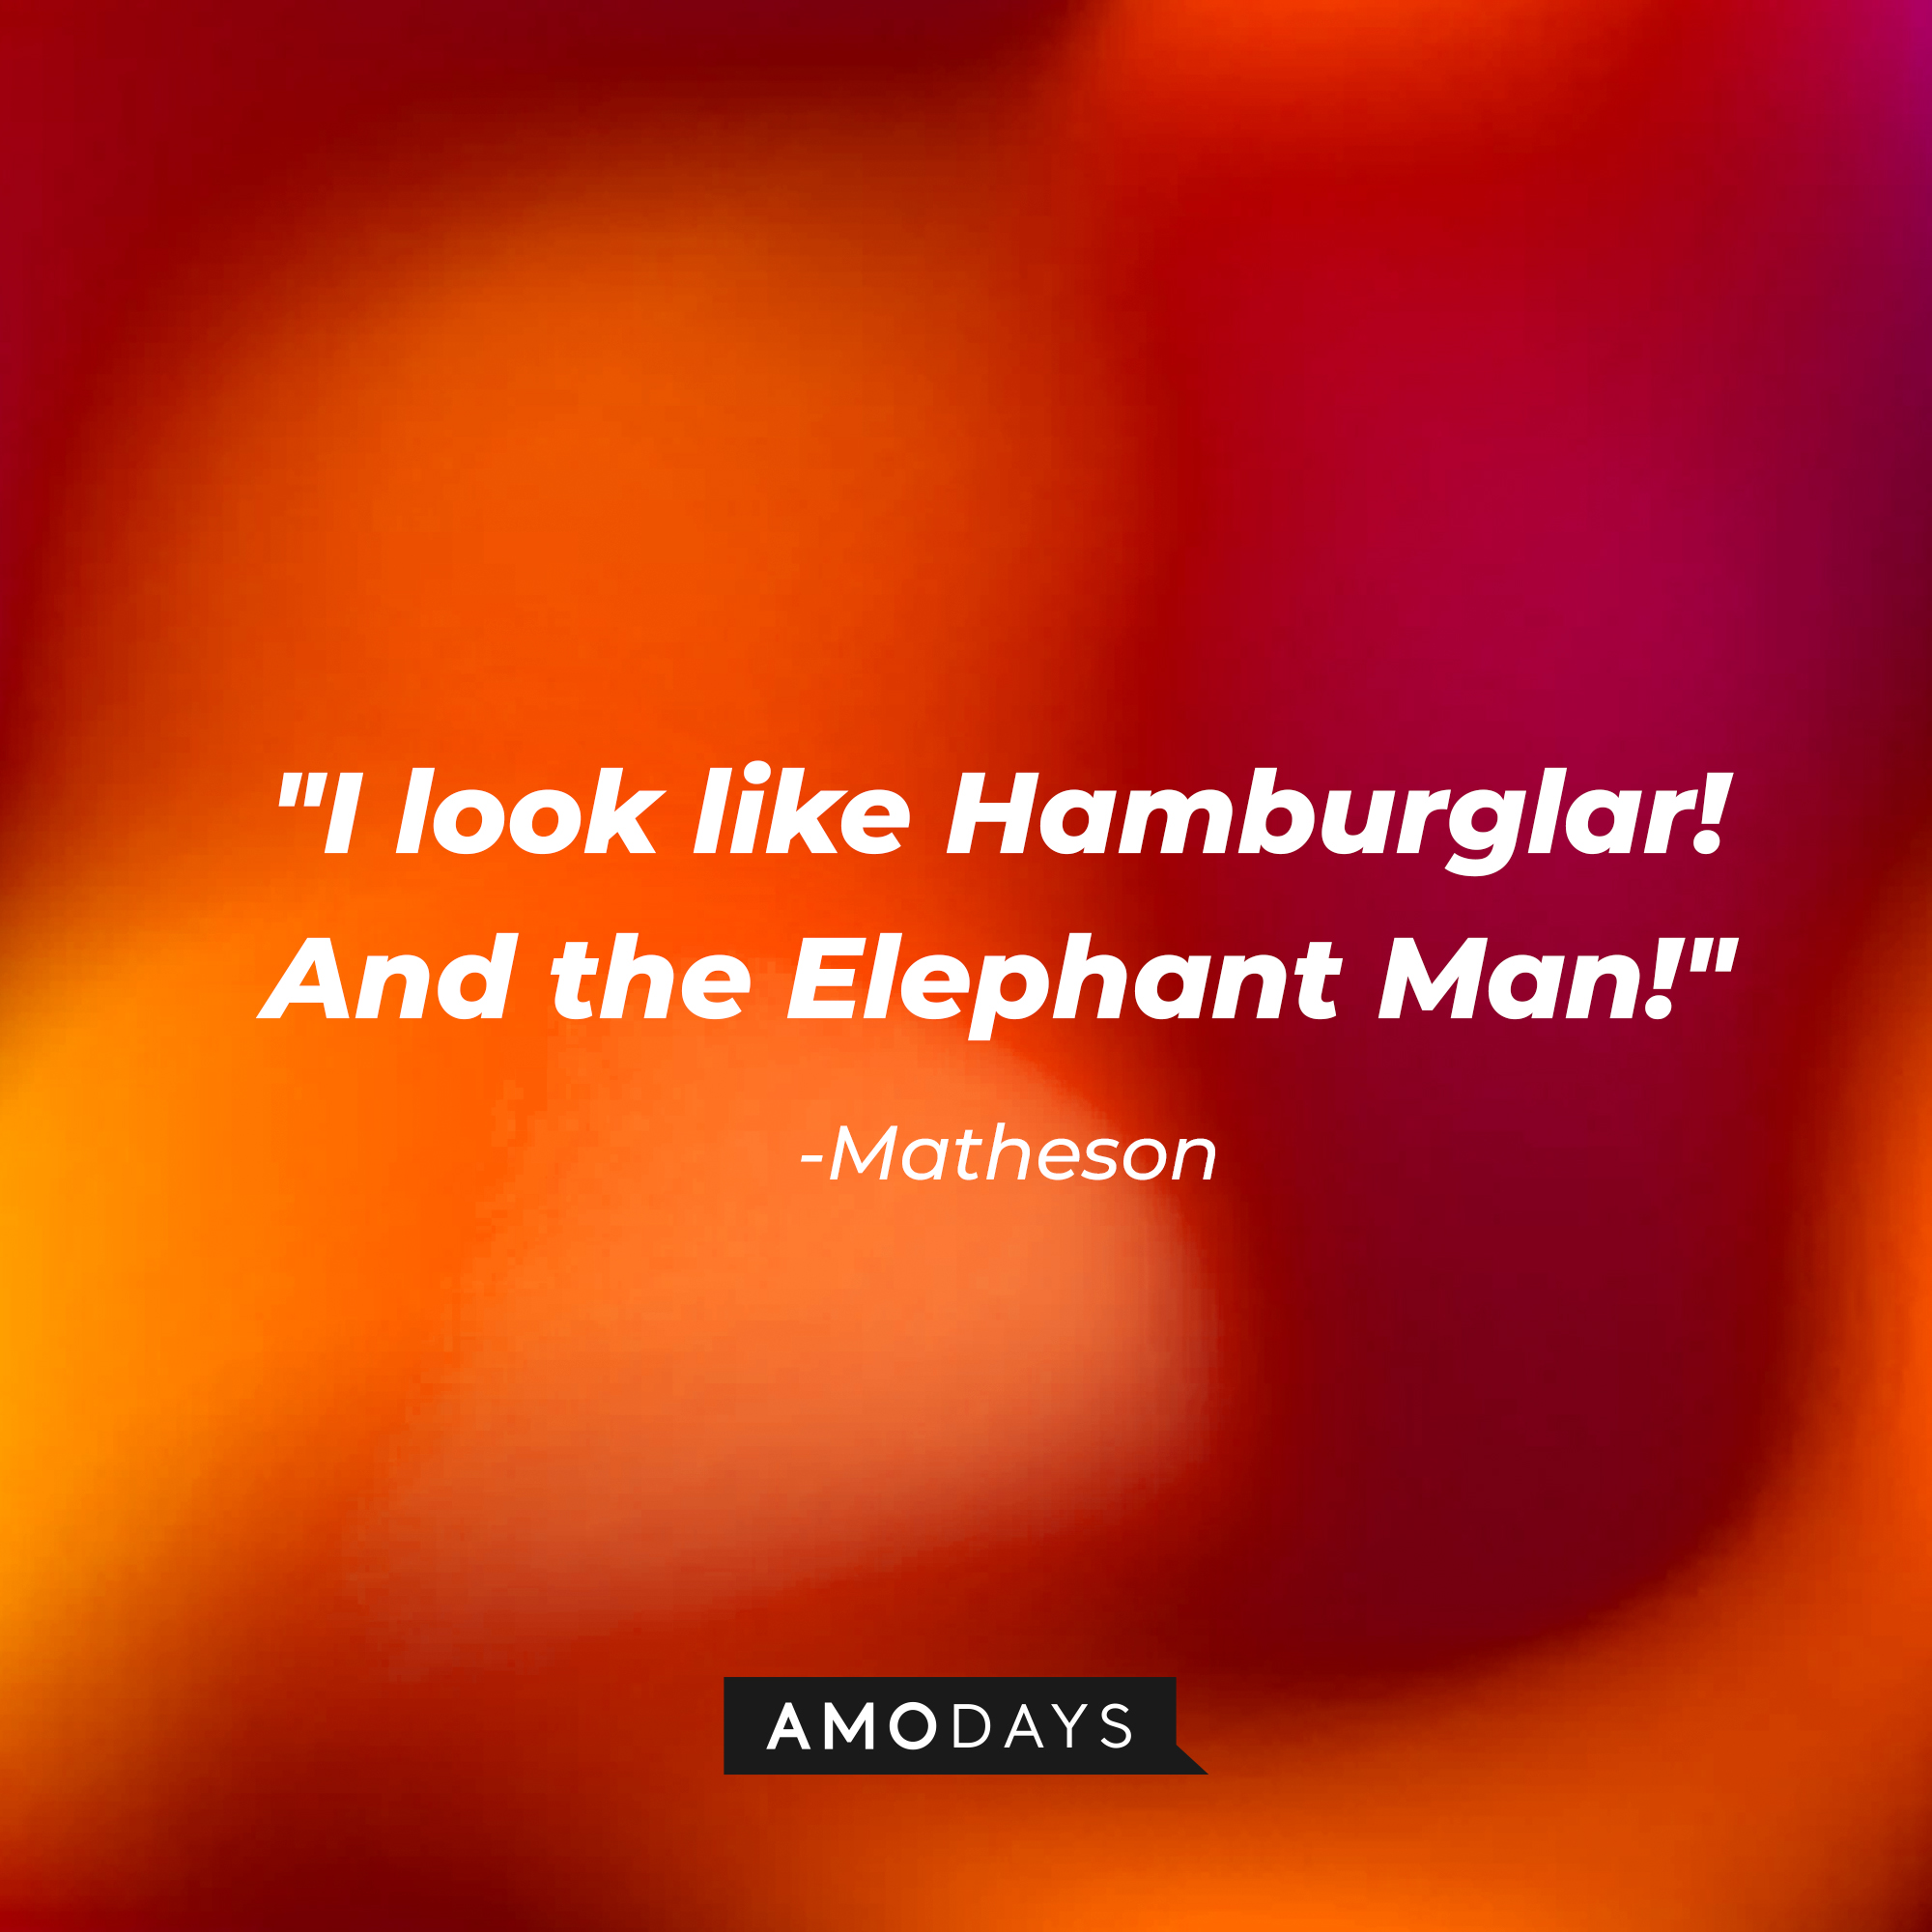 Matheson's quote: "I look like Hamburglar! And the Elephant Man!" | Source: AmoDays